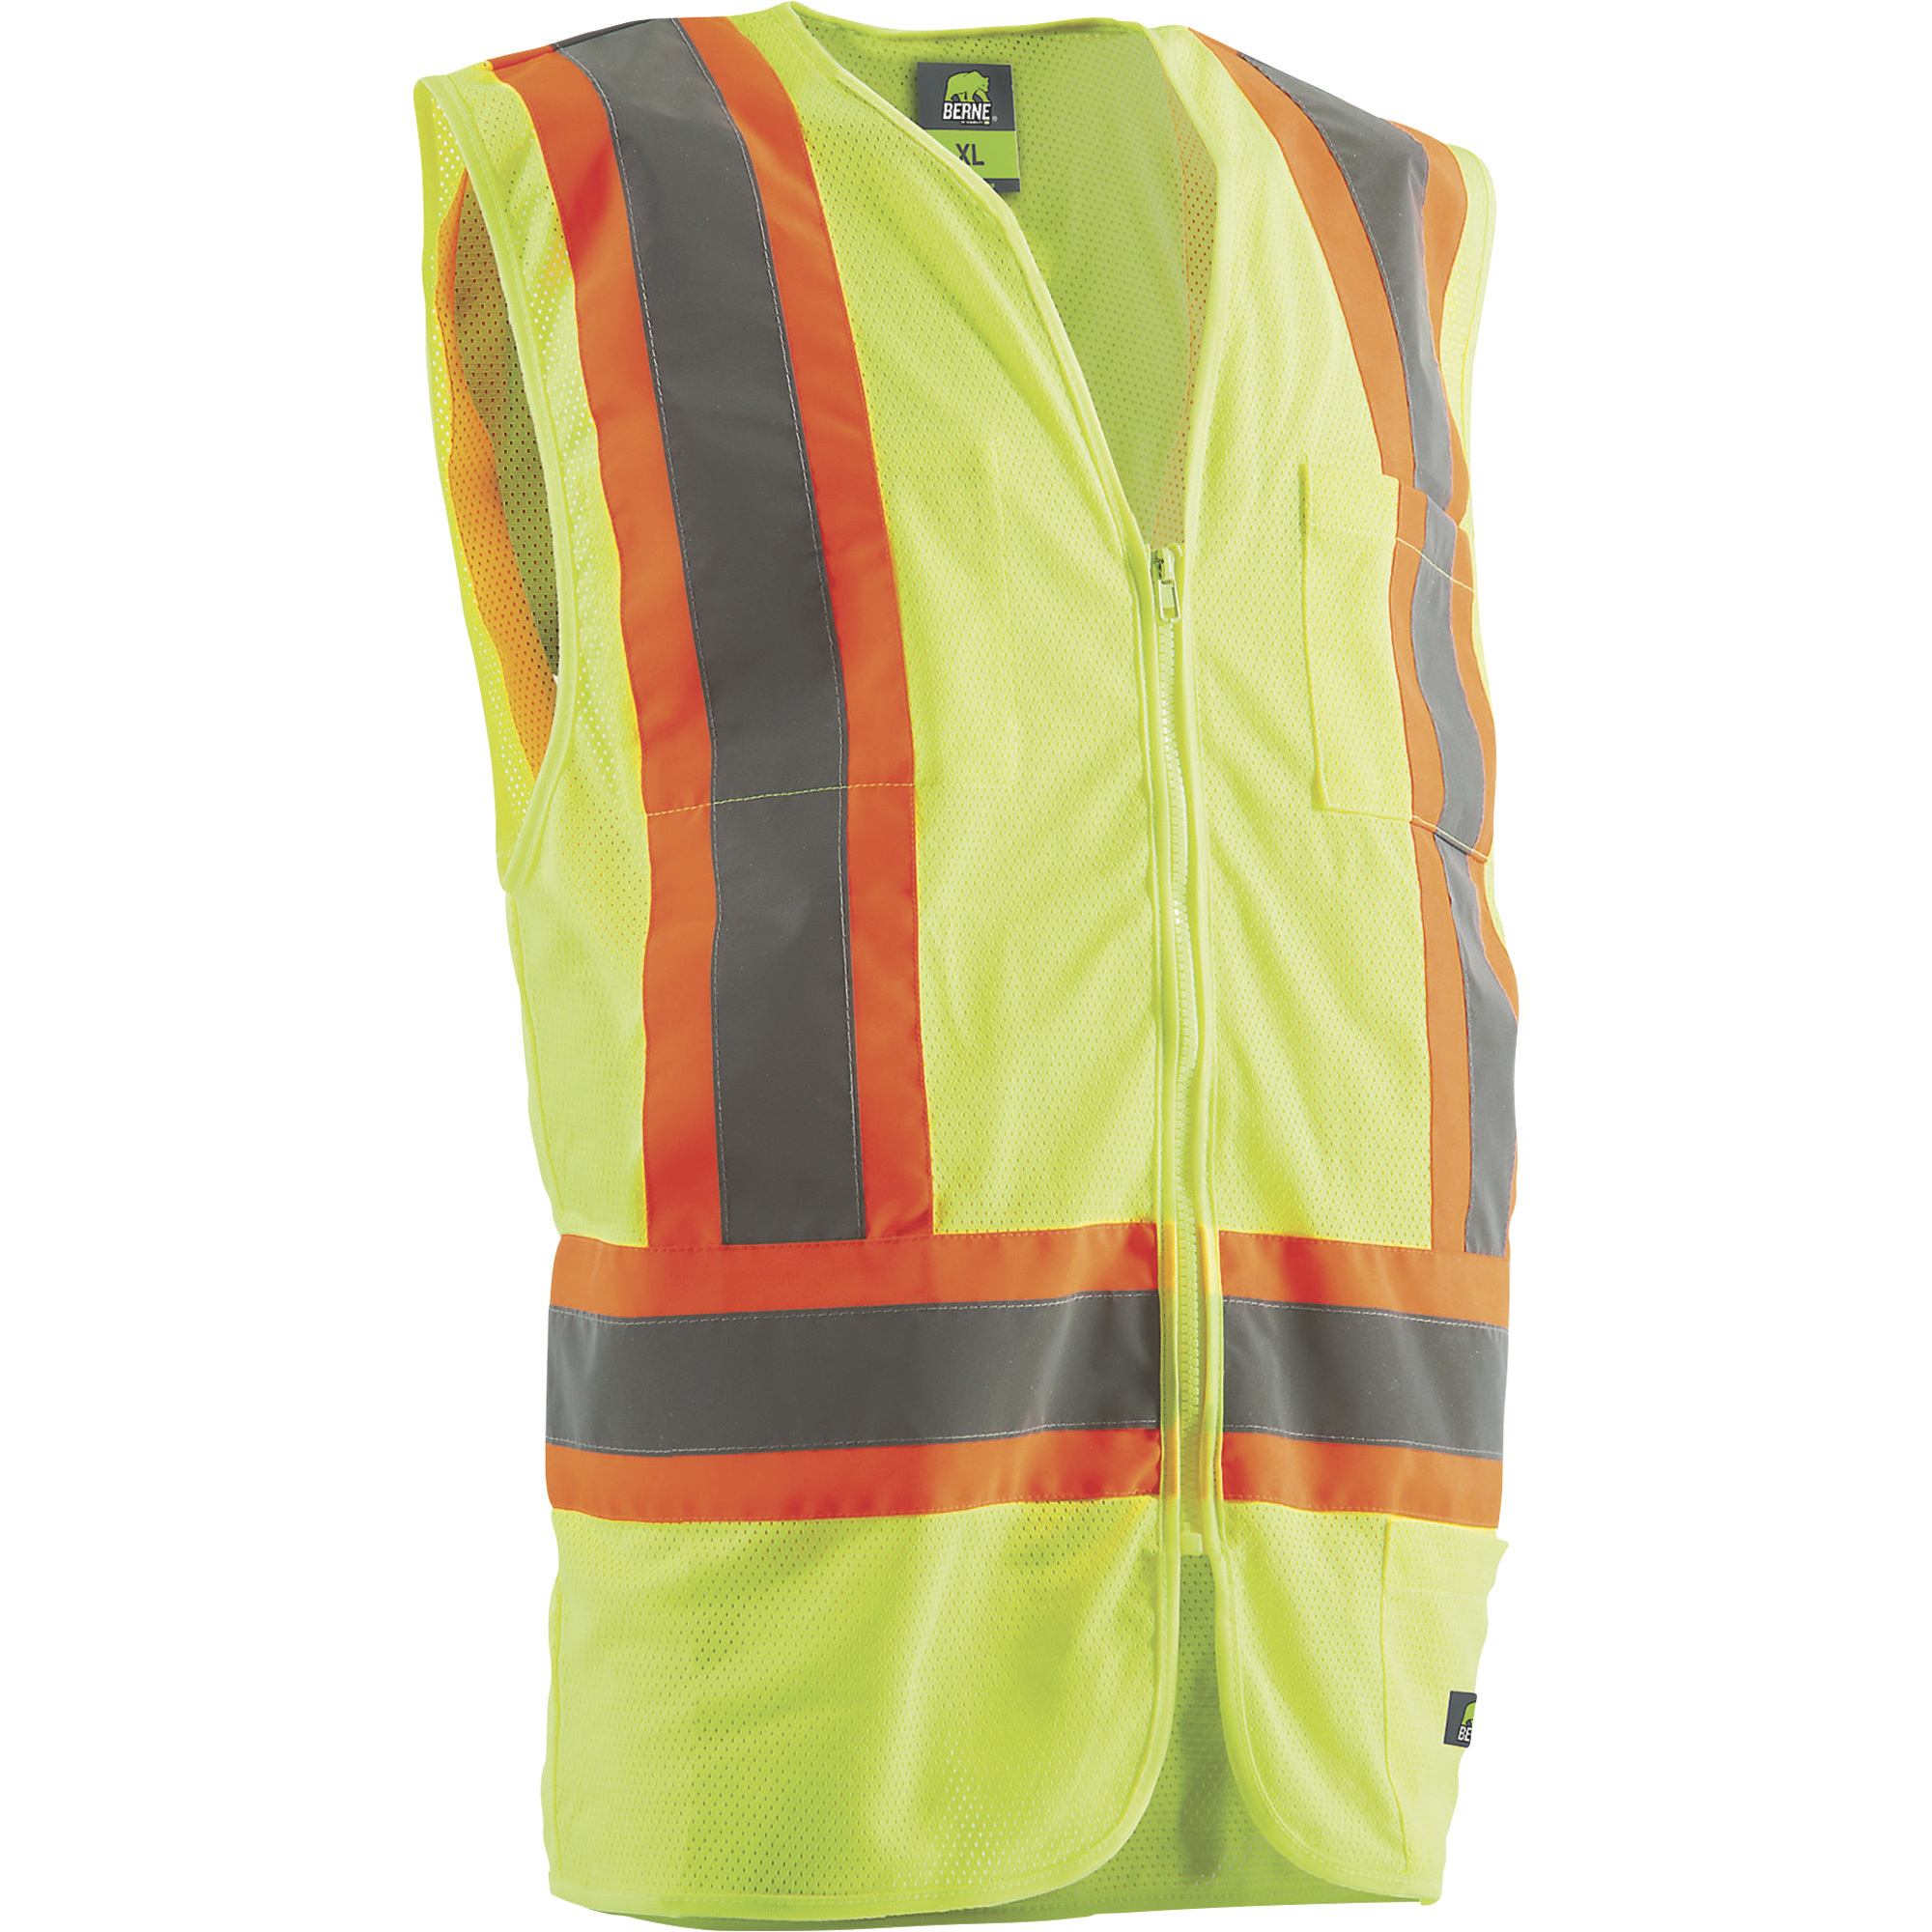 Berne Men's Class 2 High Visibility 2-Tone Safety Vest â Orange/Lime, 2XL, Model HVV046YWBT